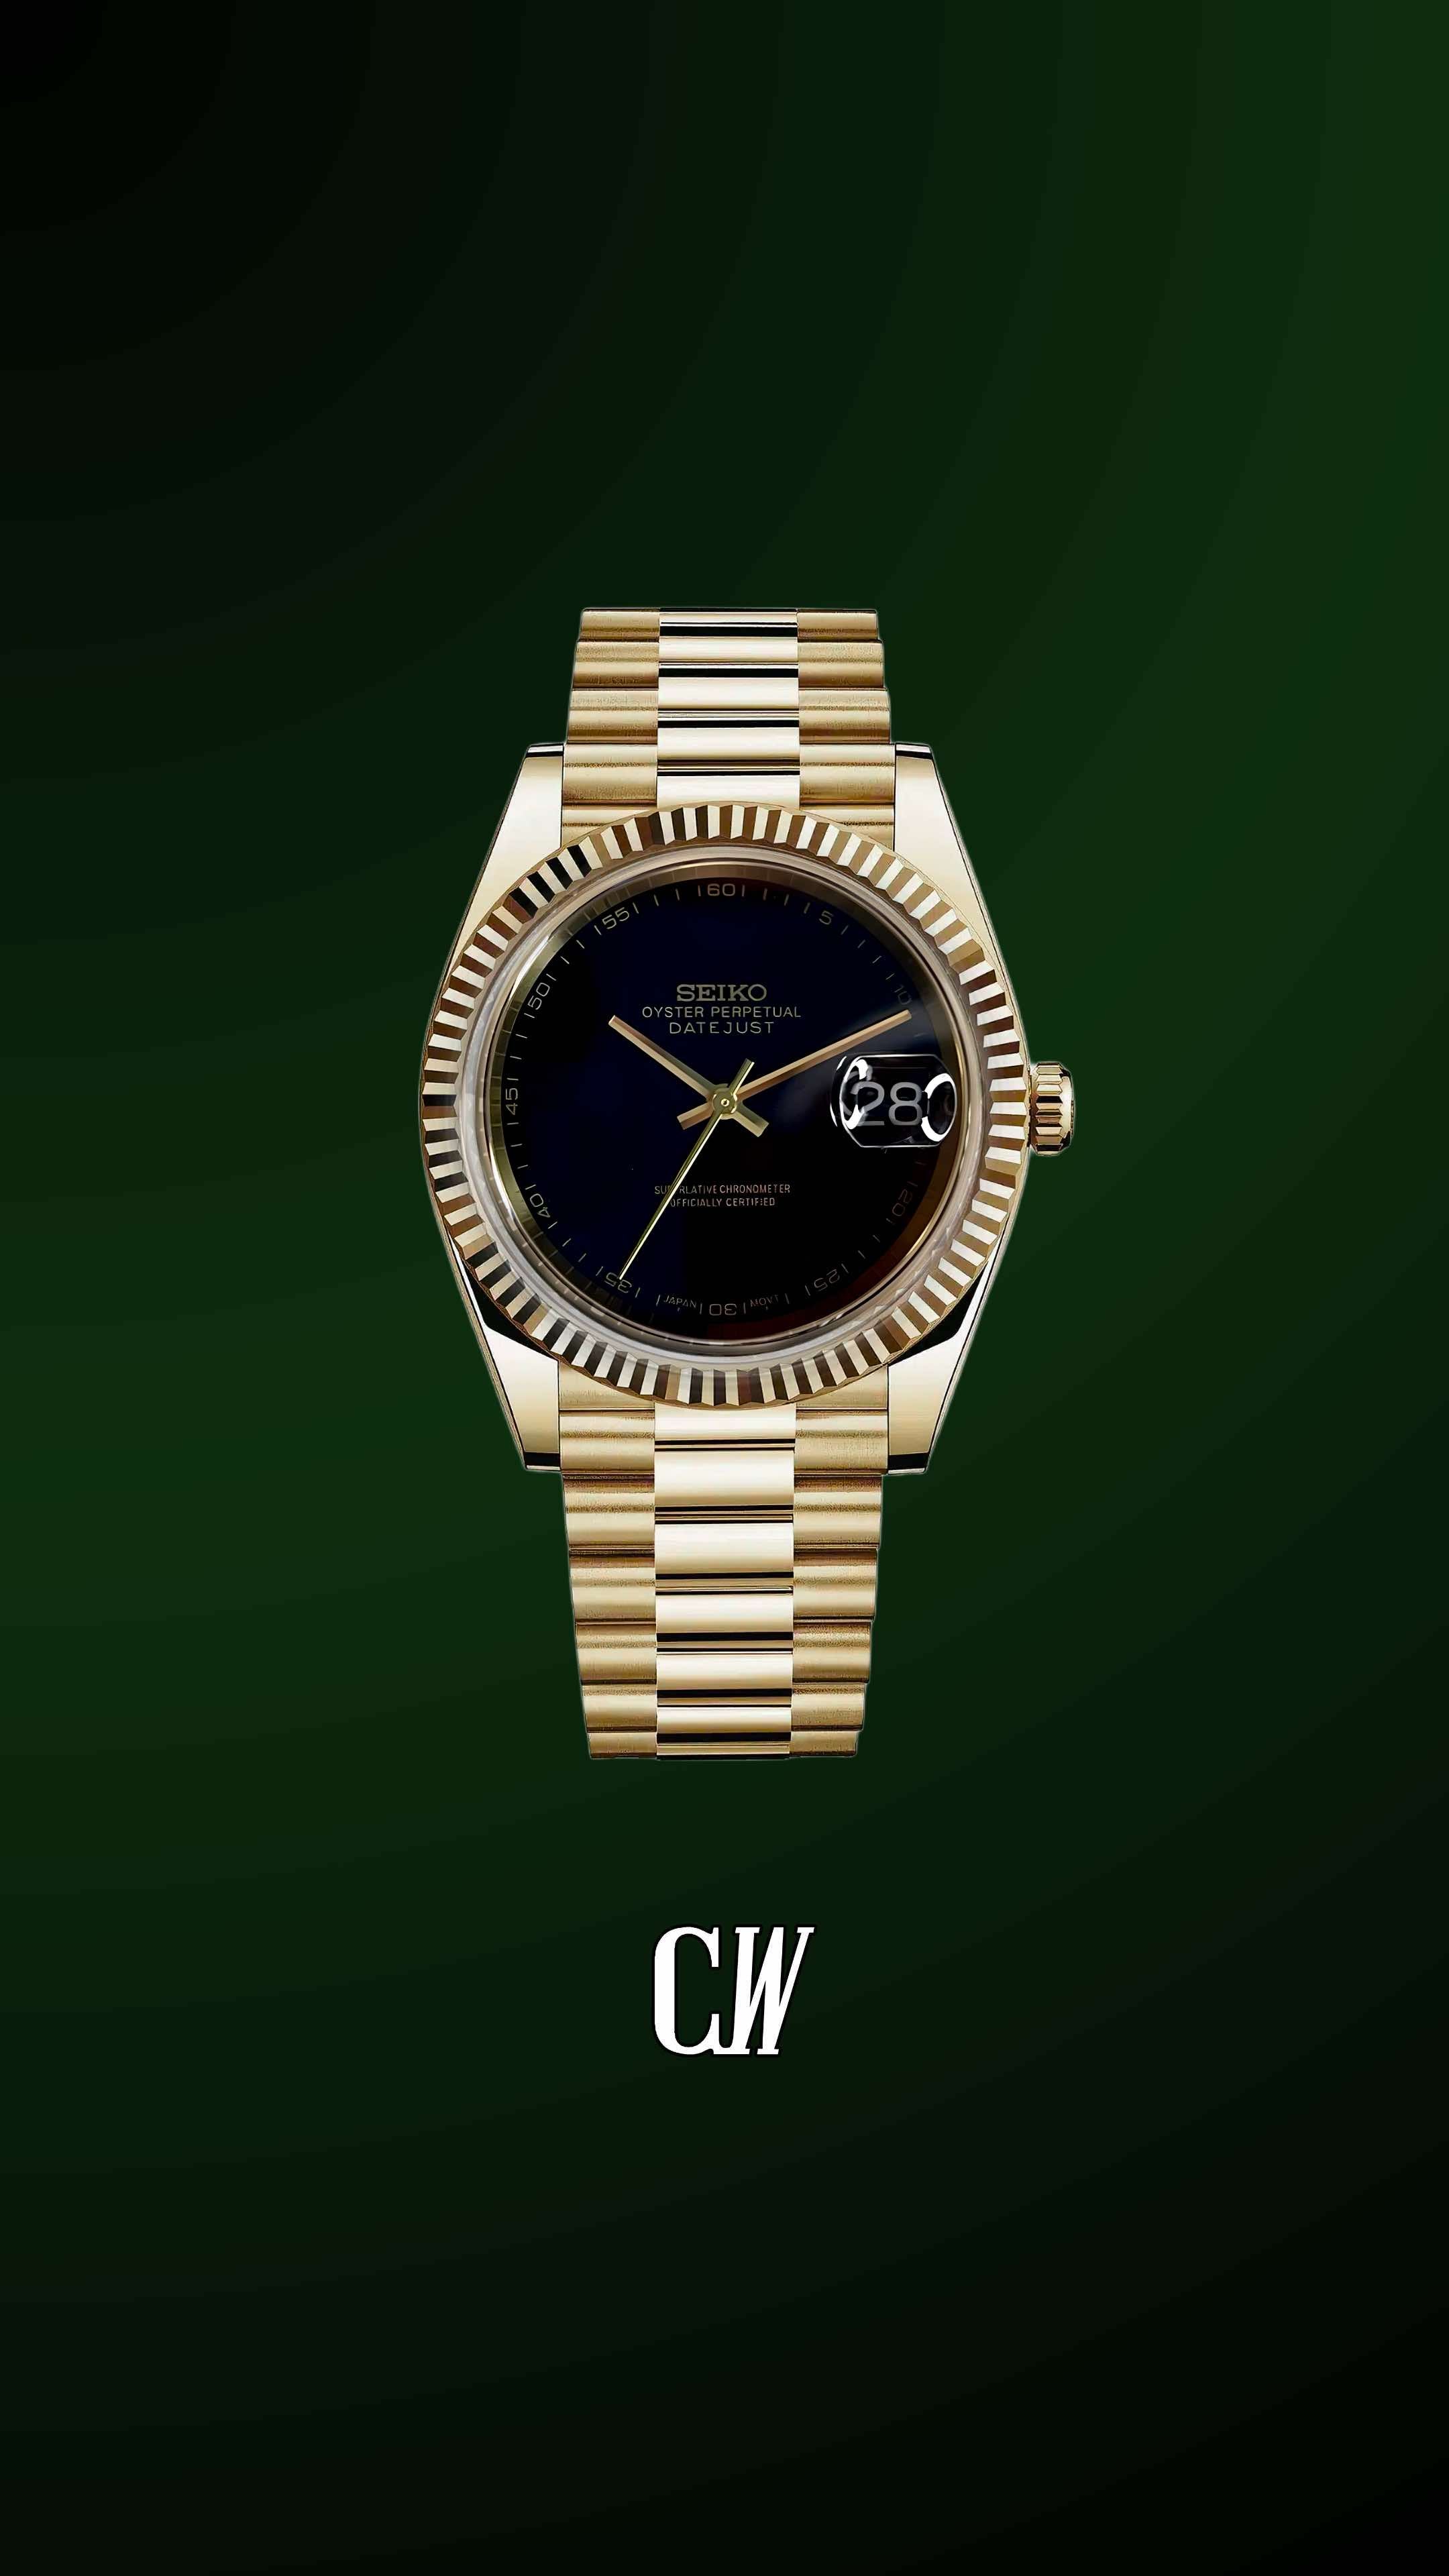 Seiko mod datejust onyx dial gold watch